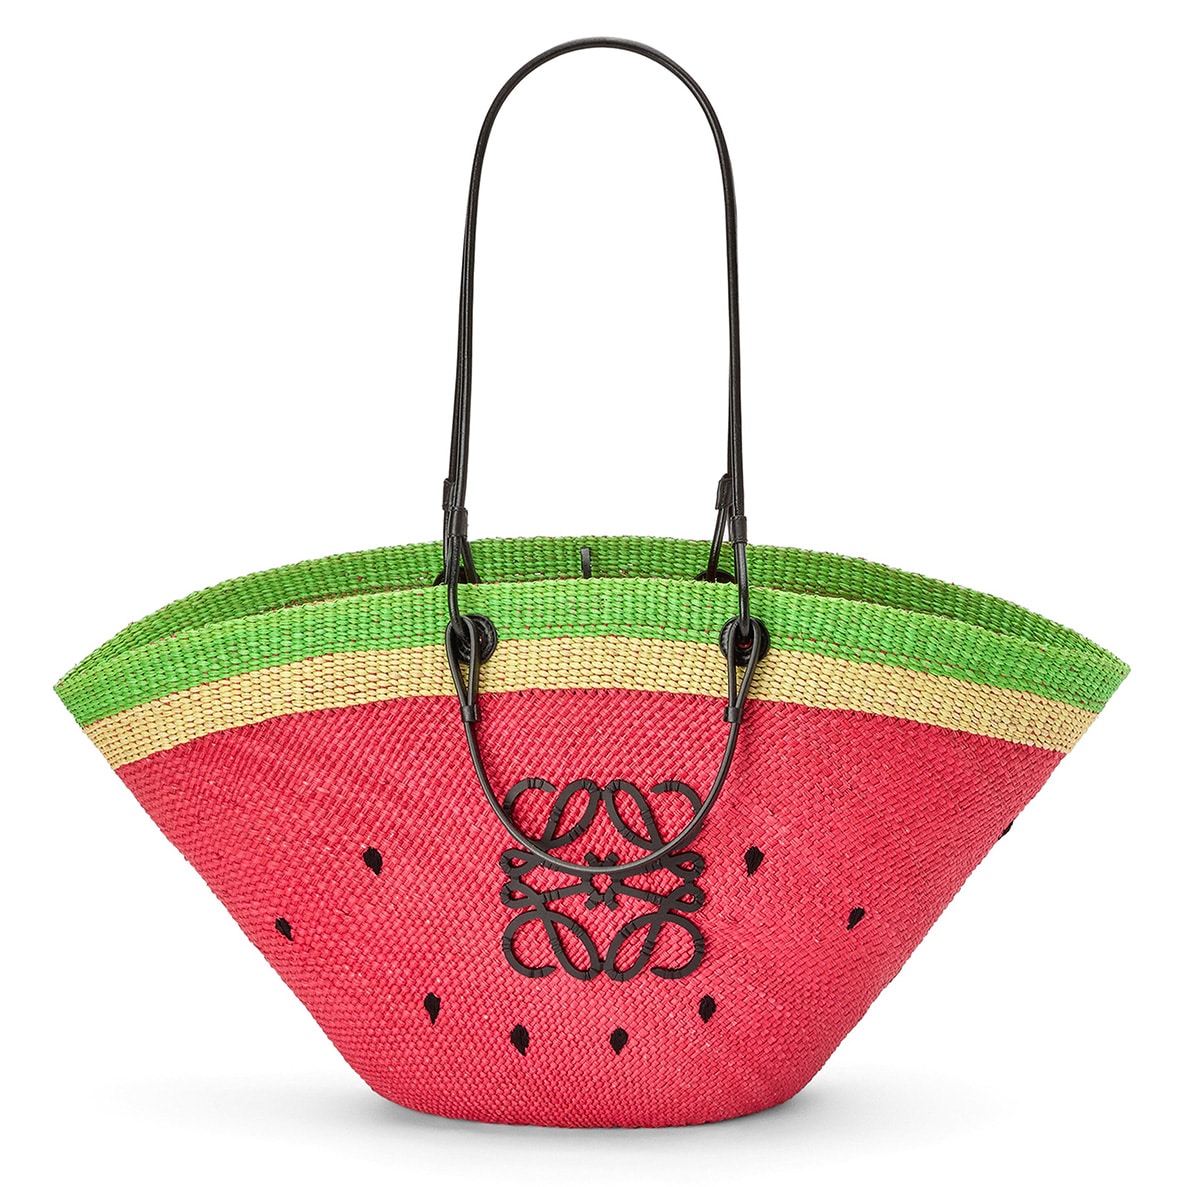 Loewe basket bag mini review – Bay Area Fashionista